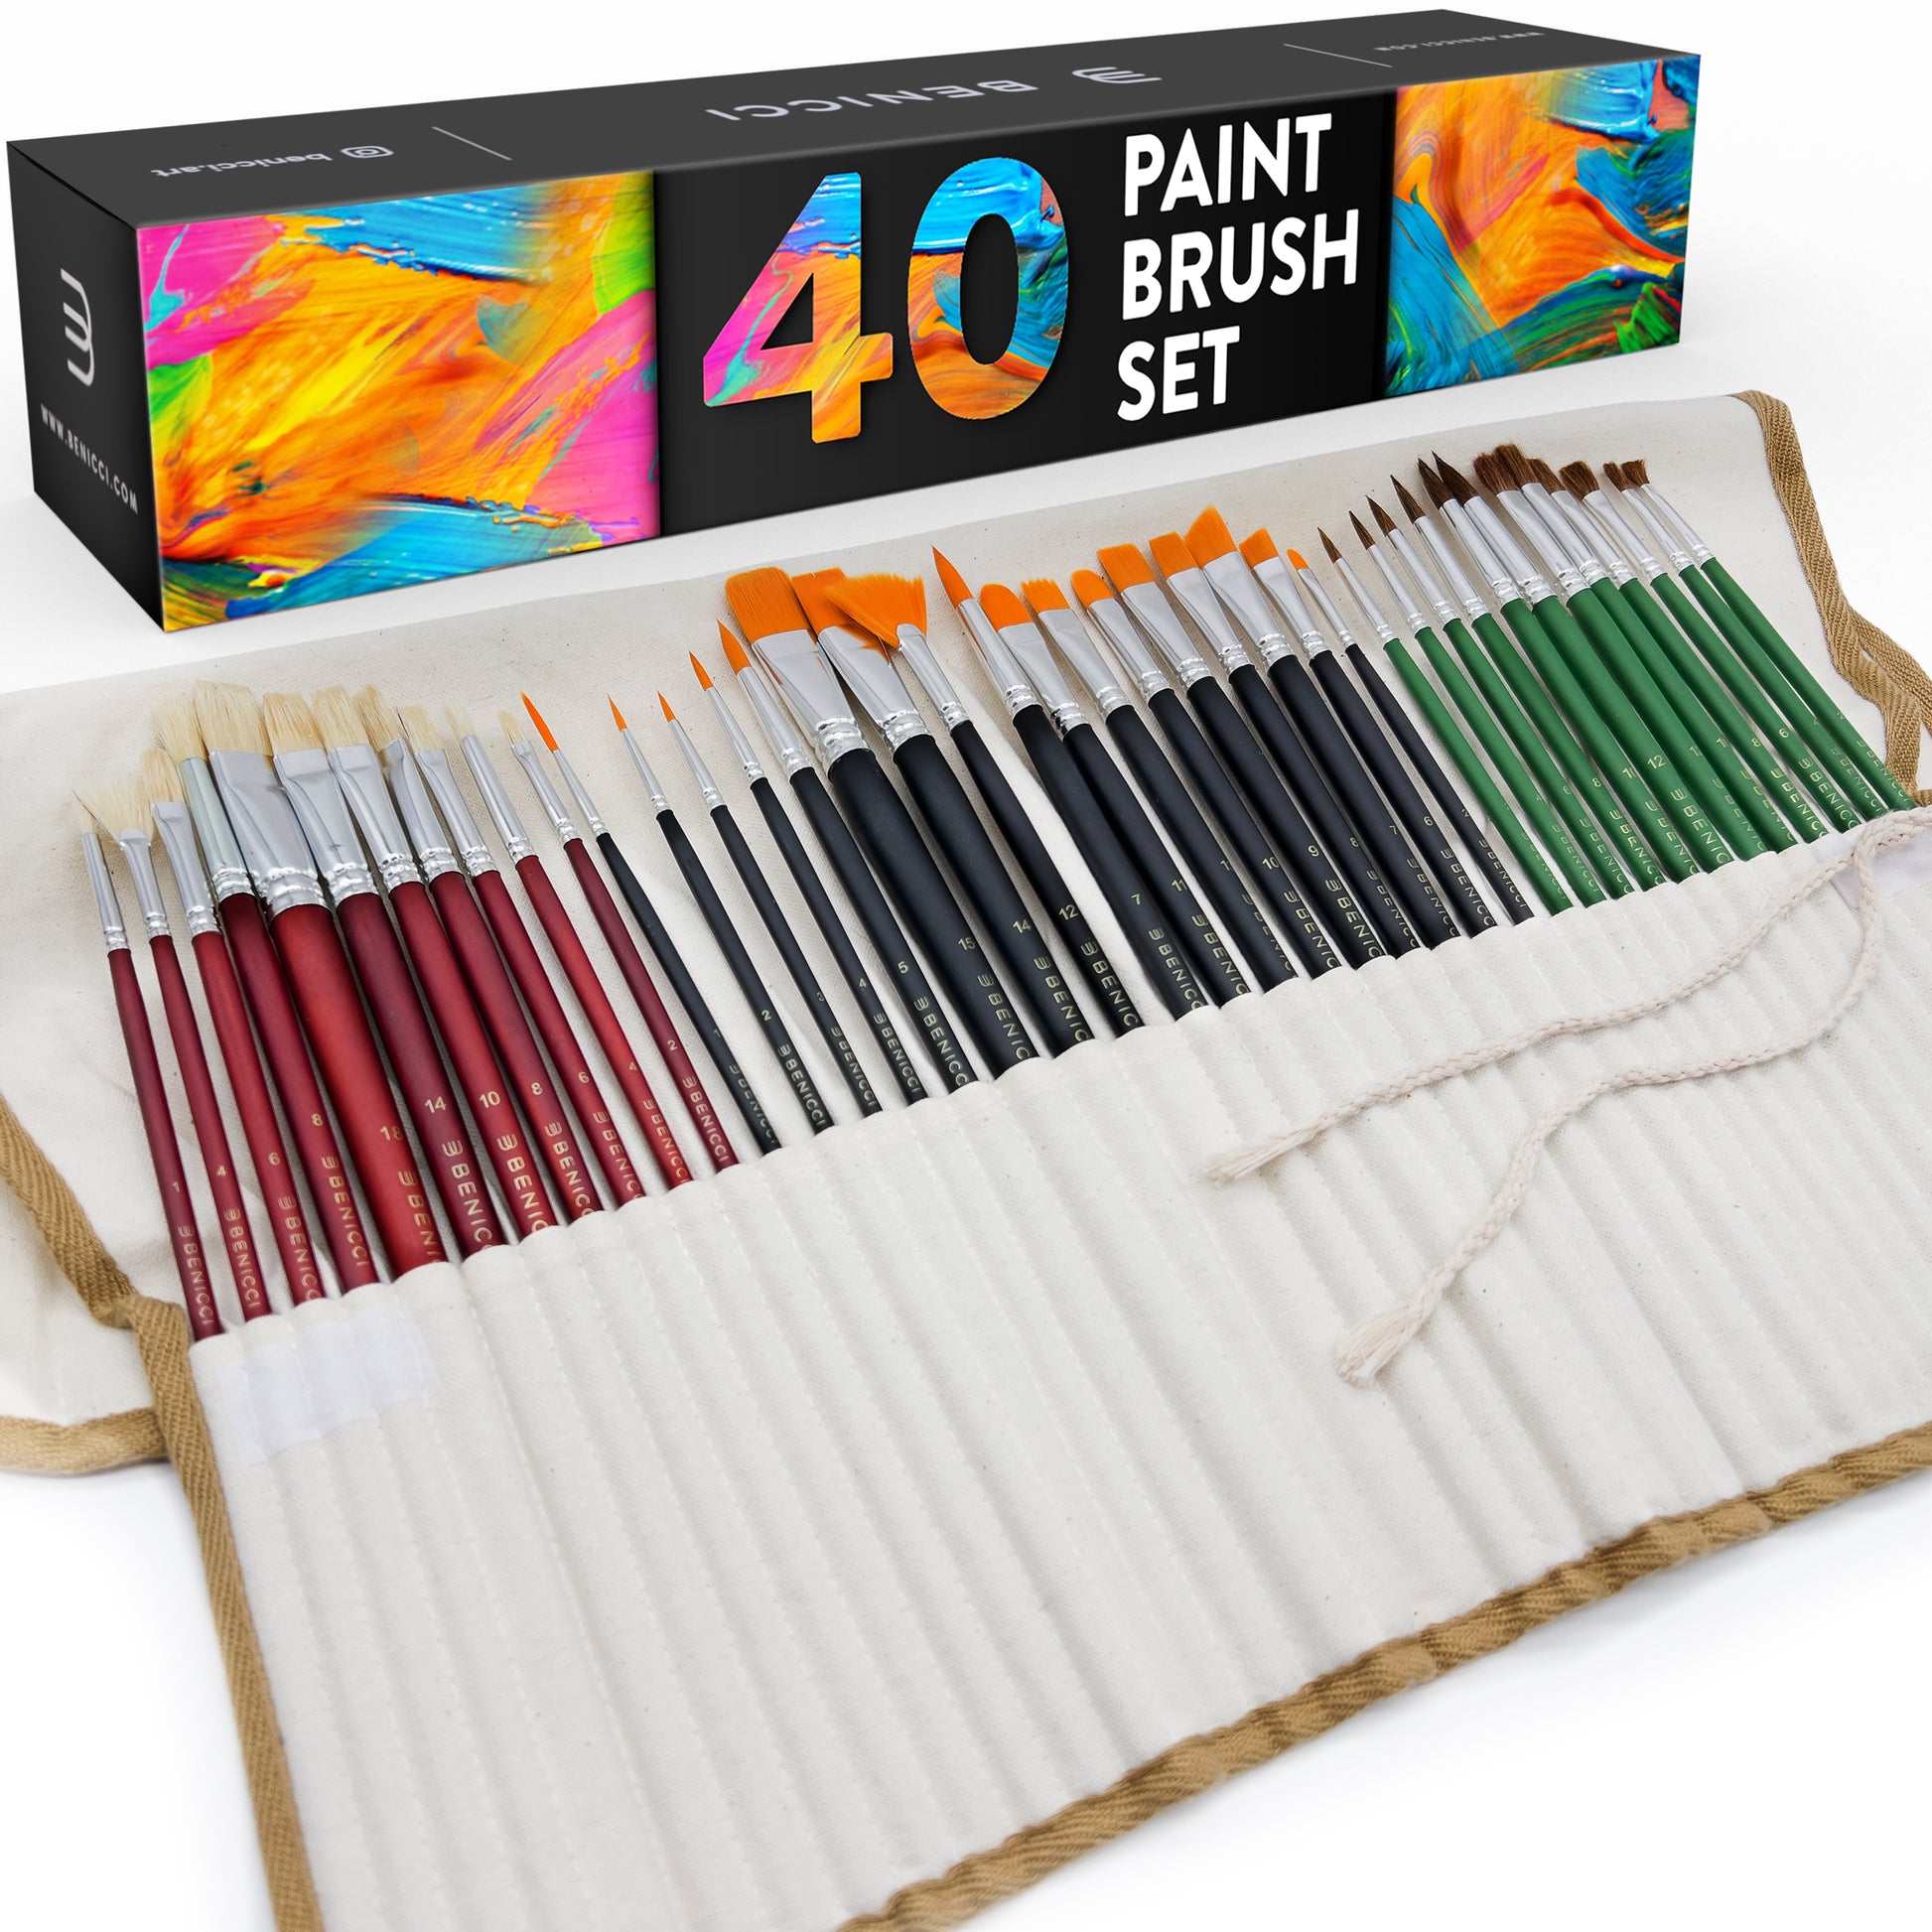 Premium Quality Acrylic Paint Set 24 Colors - (1.28oz, 38ml) - with 6 –  Benicci